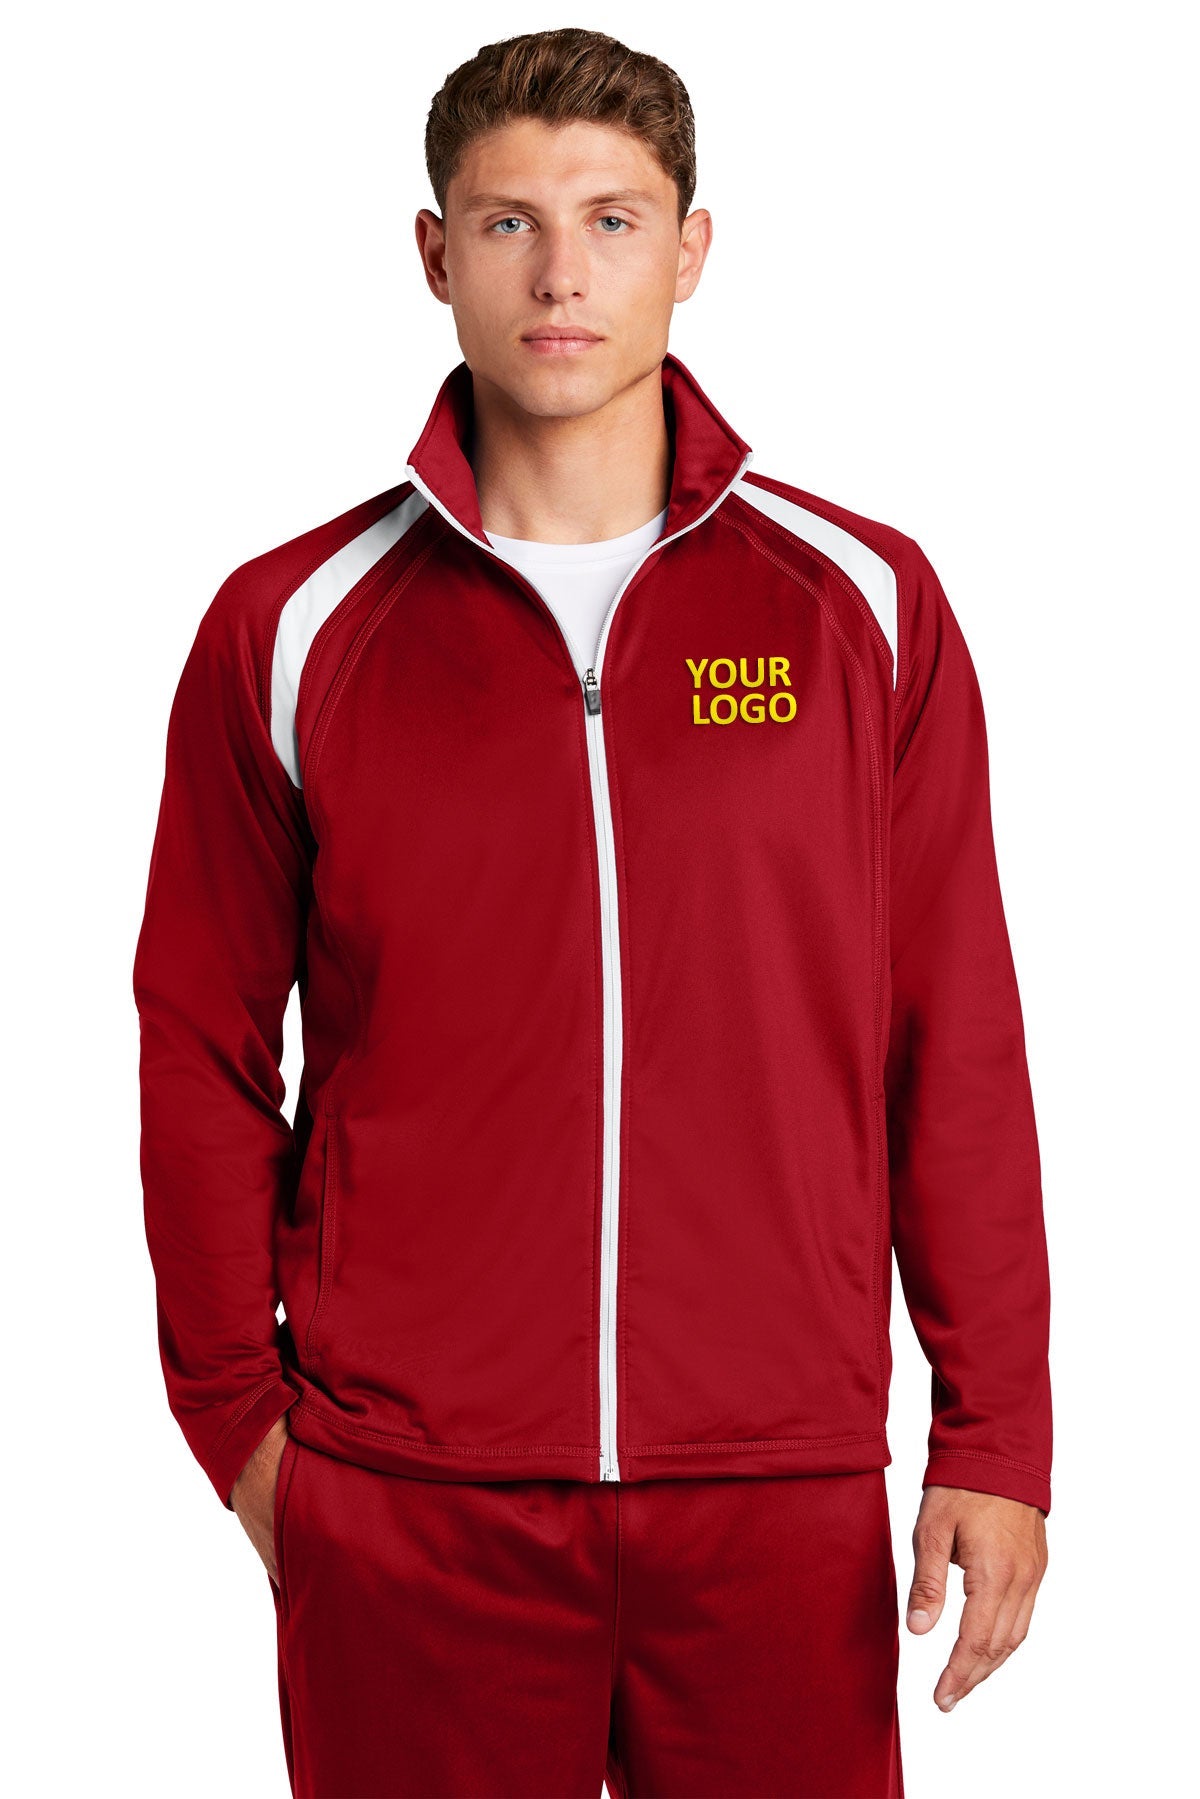 Sport-Tek True Red/White JST90 embroidered jackets for business